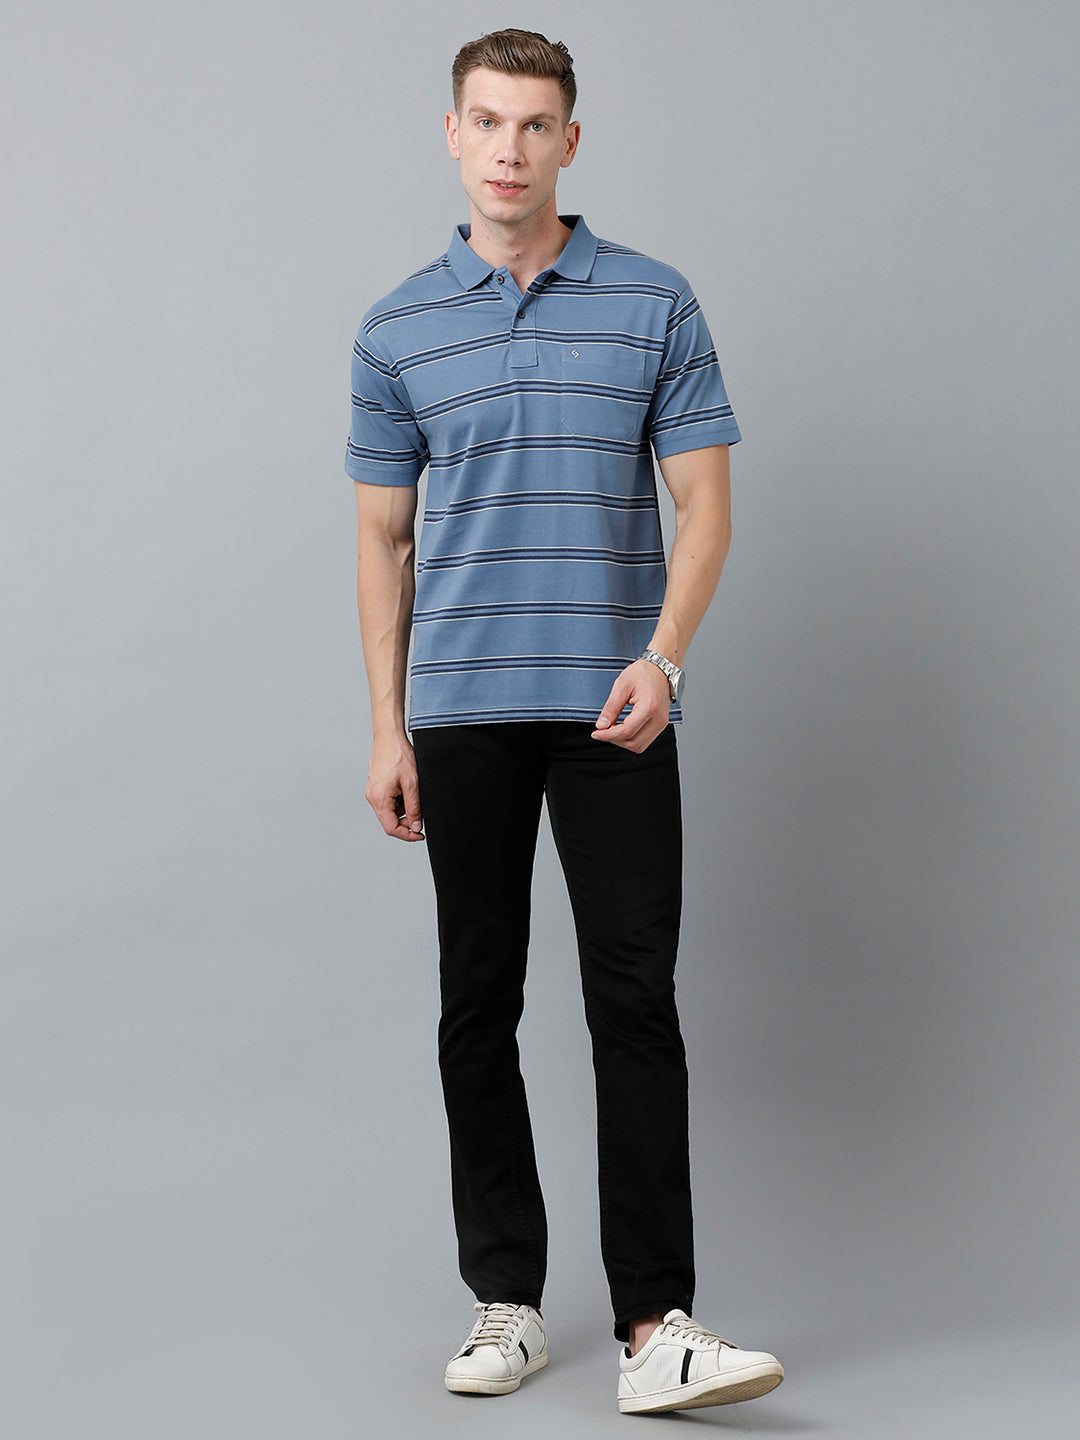 Classic Polo Men's Cotton Blend Half Sleeve Striped Authentic Fit Polo Neck Blue Color T-Shirt | Avon - 524 A